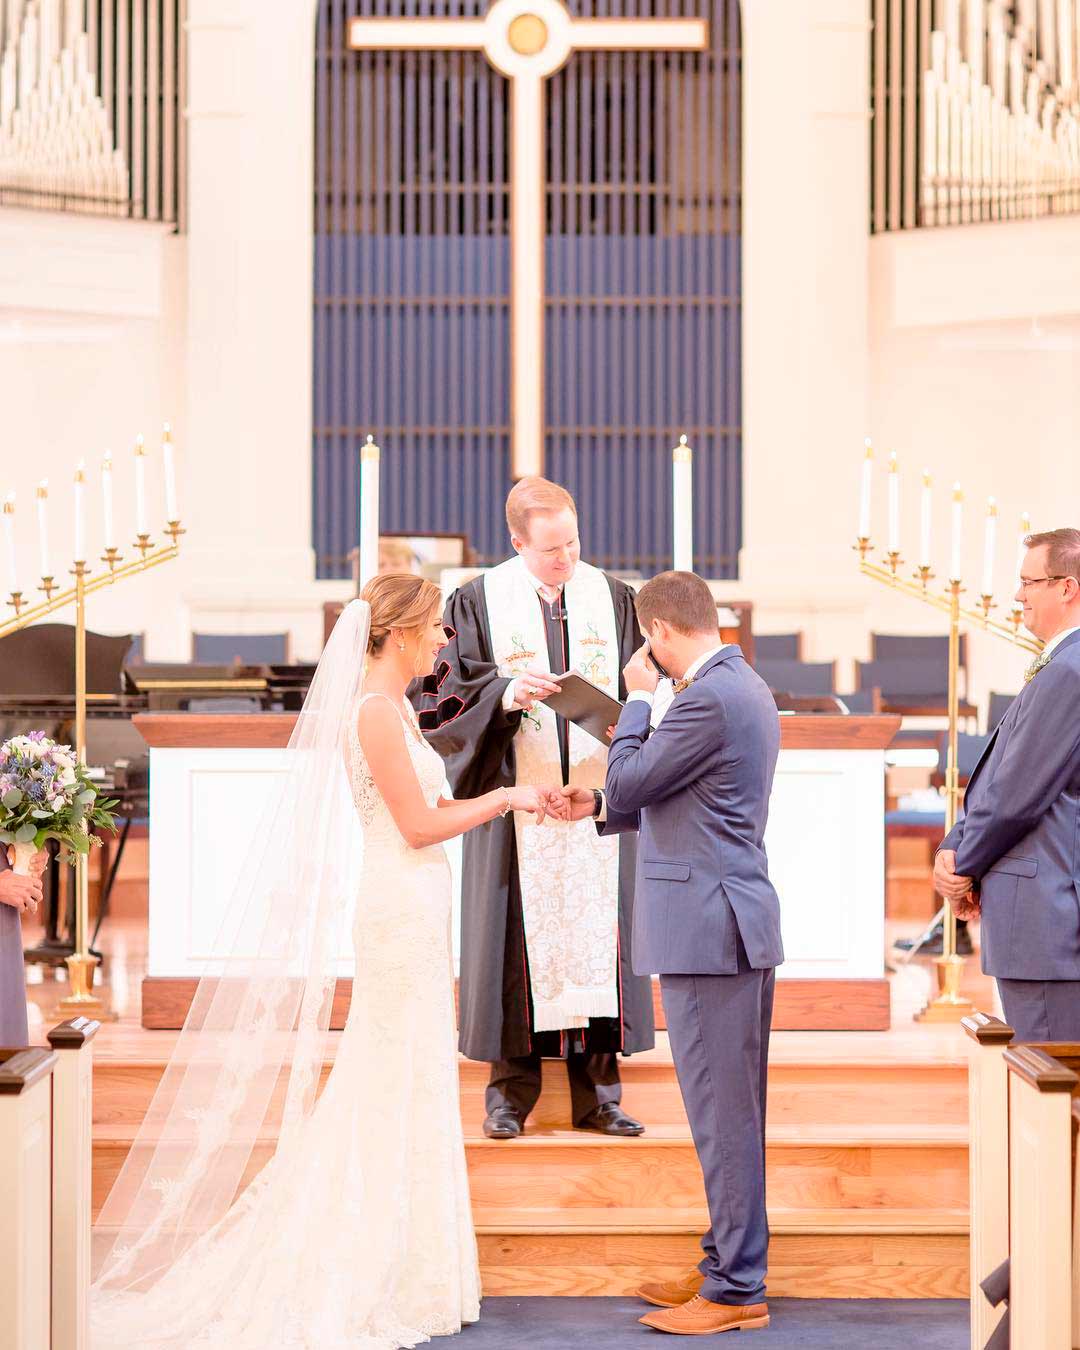 traditional wedding vows catholic bride groom church